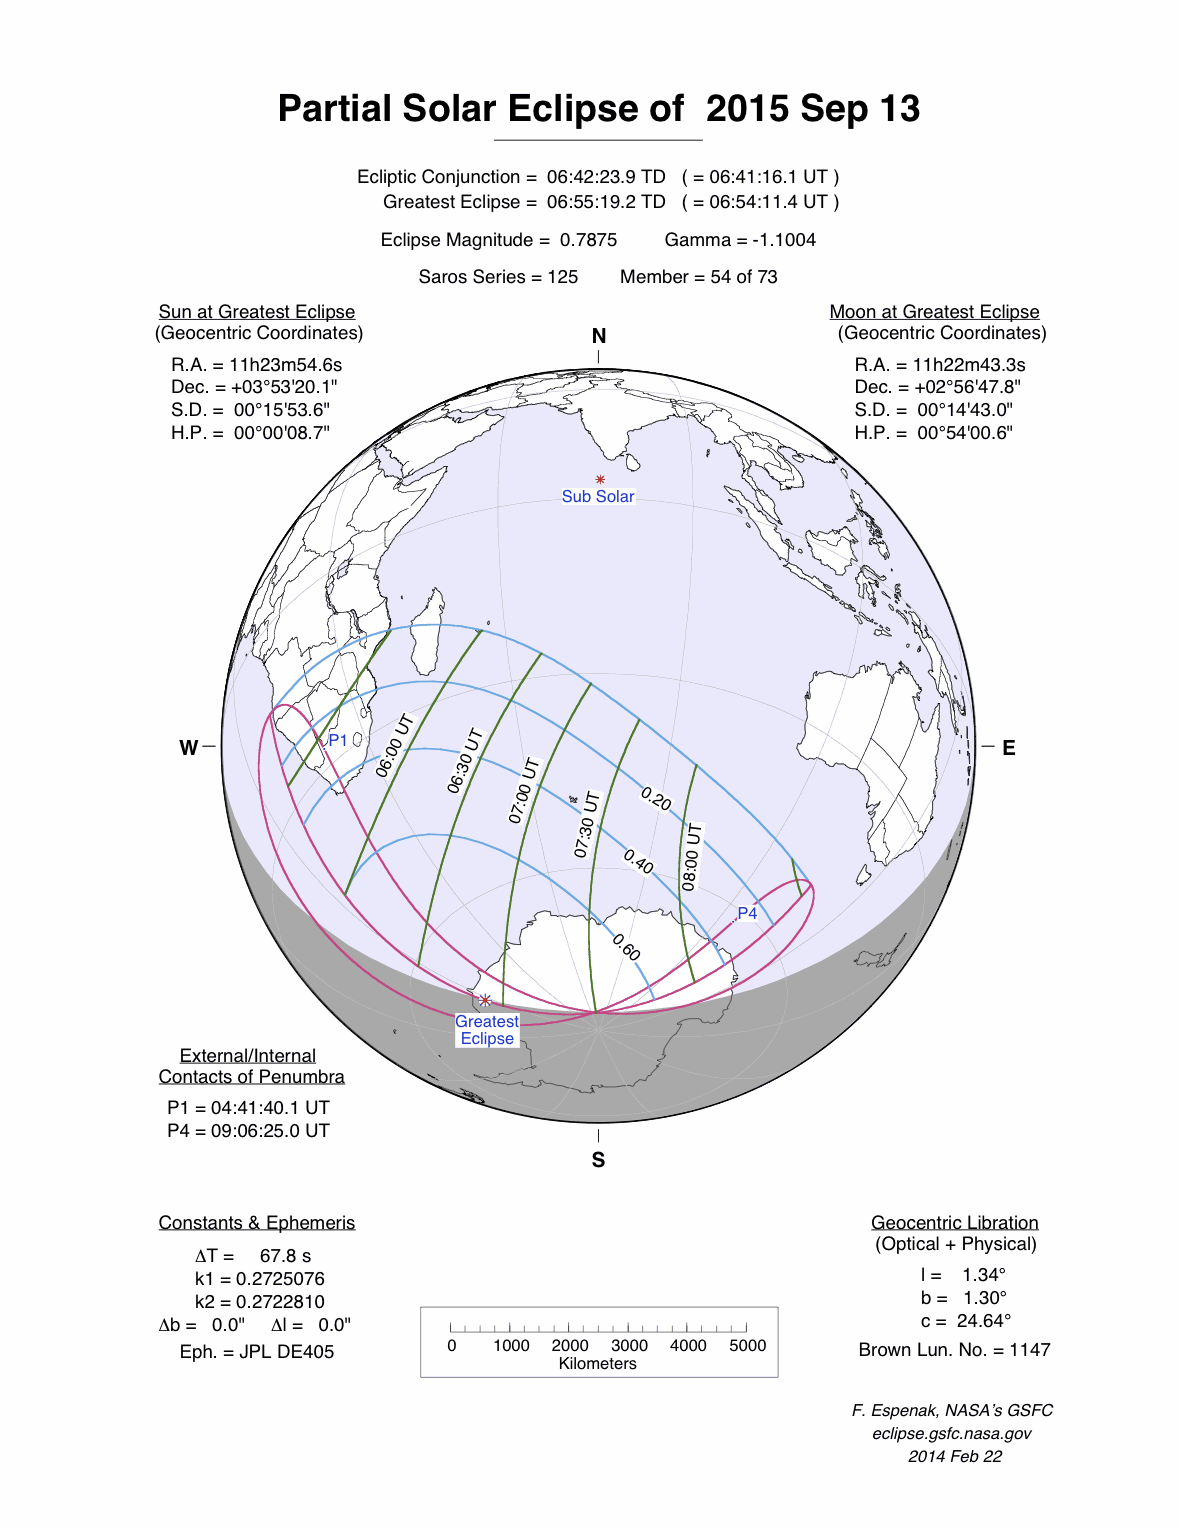 Partial Solar Eclipse 2015 September 13